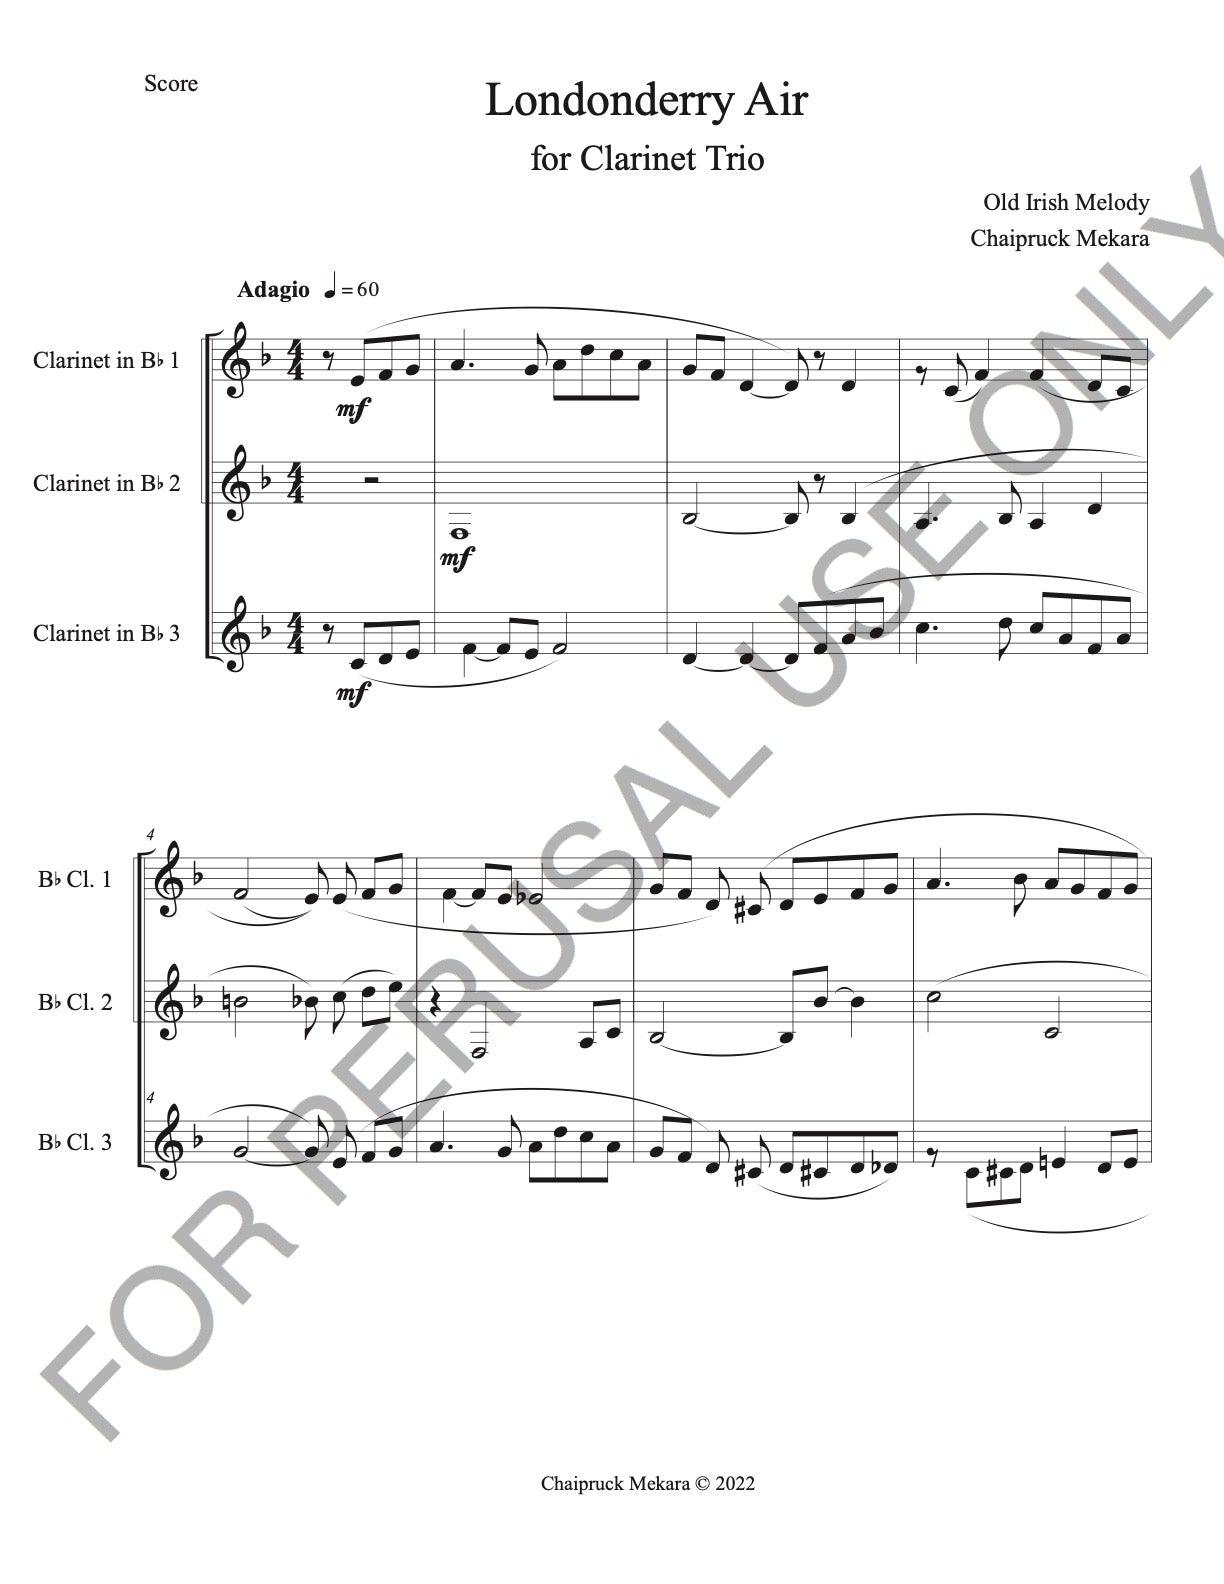 Londonderry Air for Clarinet Trio (score+parts) - ChaipruckMekara